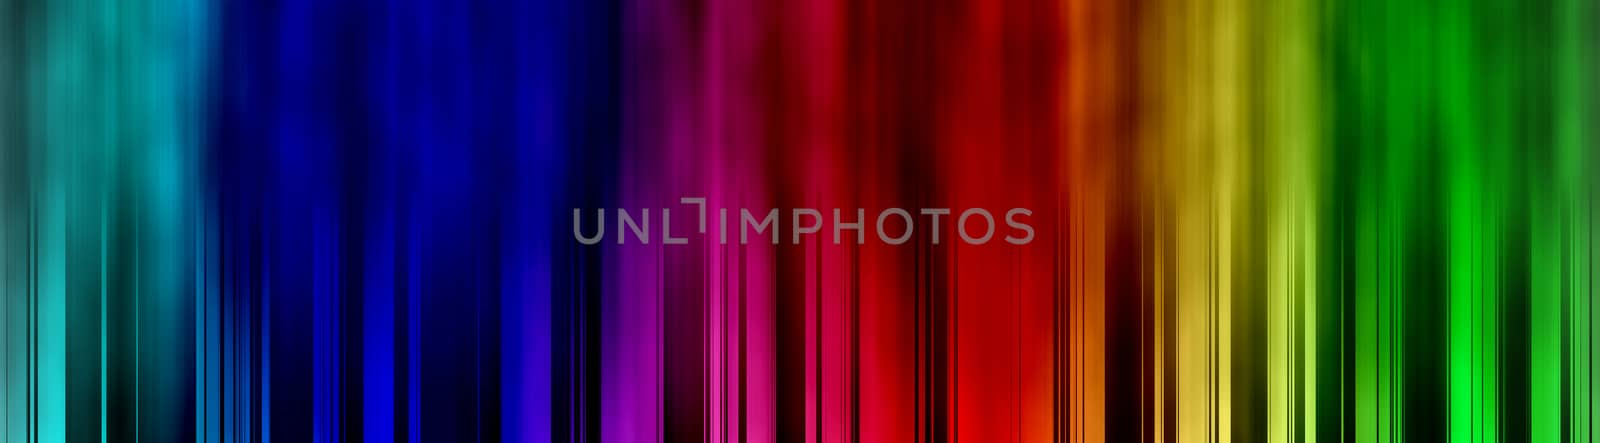 Rainbow colors abstract background. by Eugene_Yemelyanov